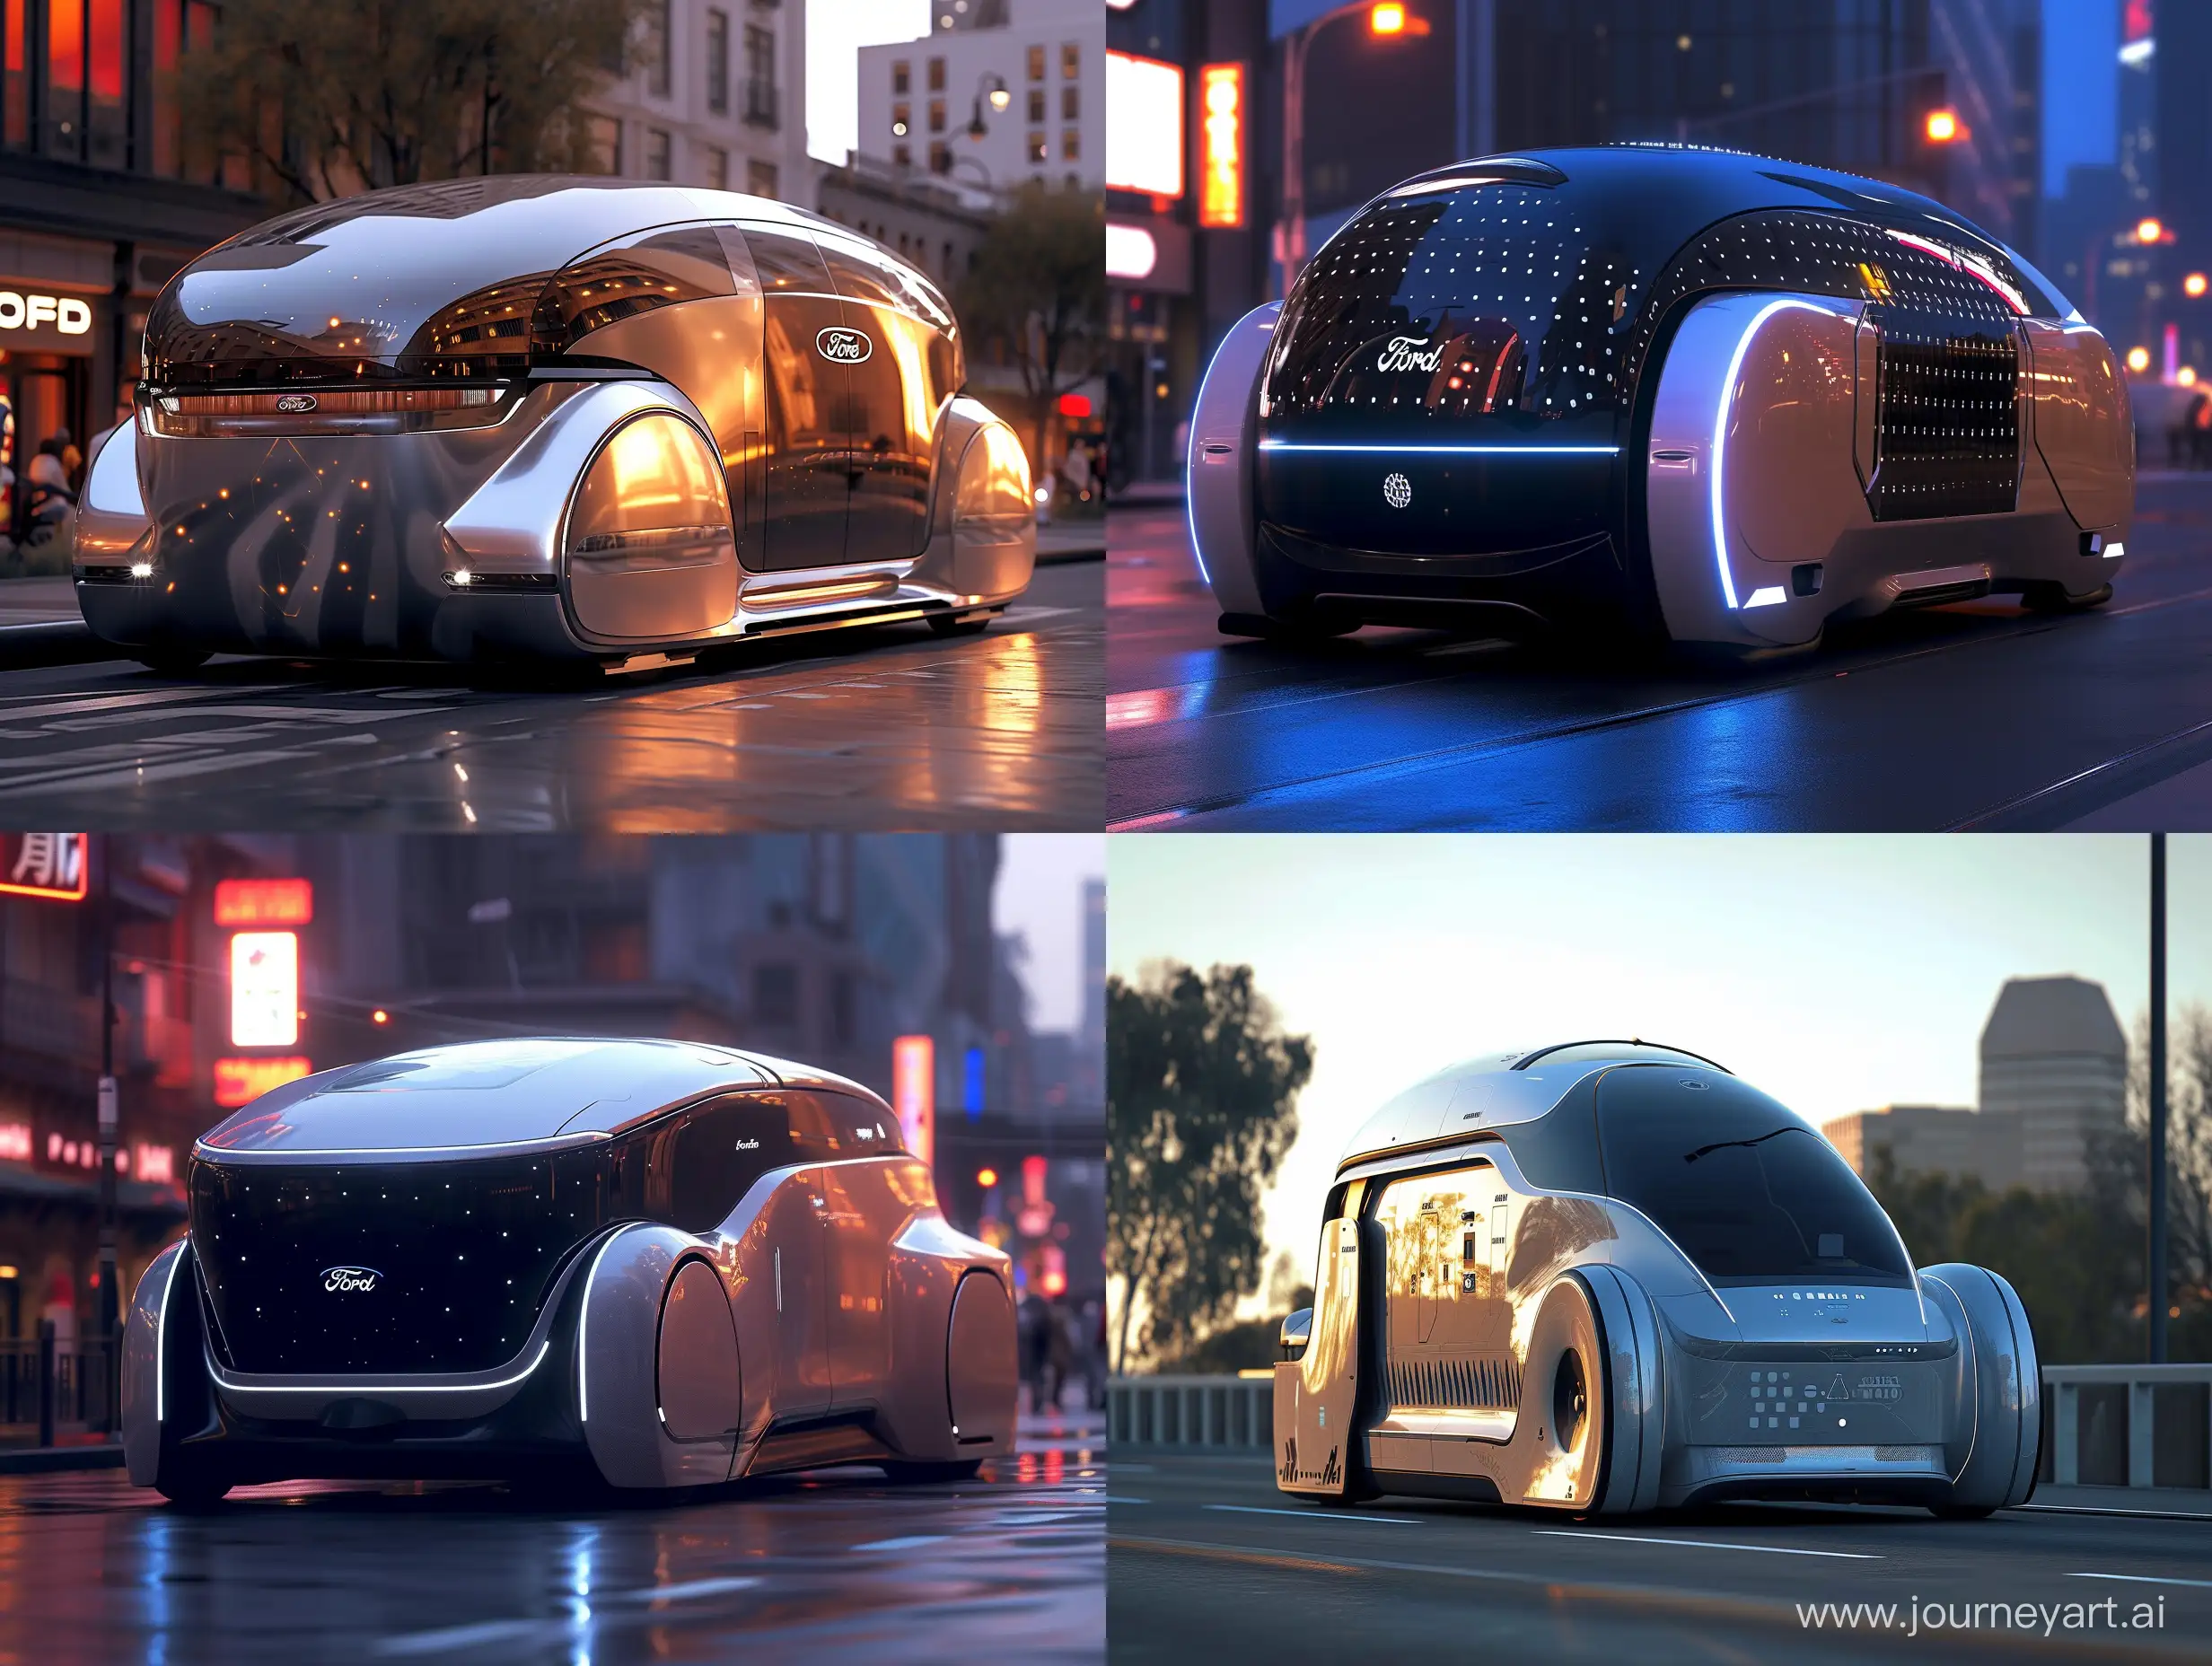 Futuristic-Autonomous-Ford-Vehicle-Navigating-Raw-City-Environment